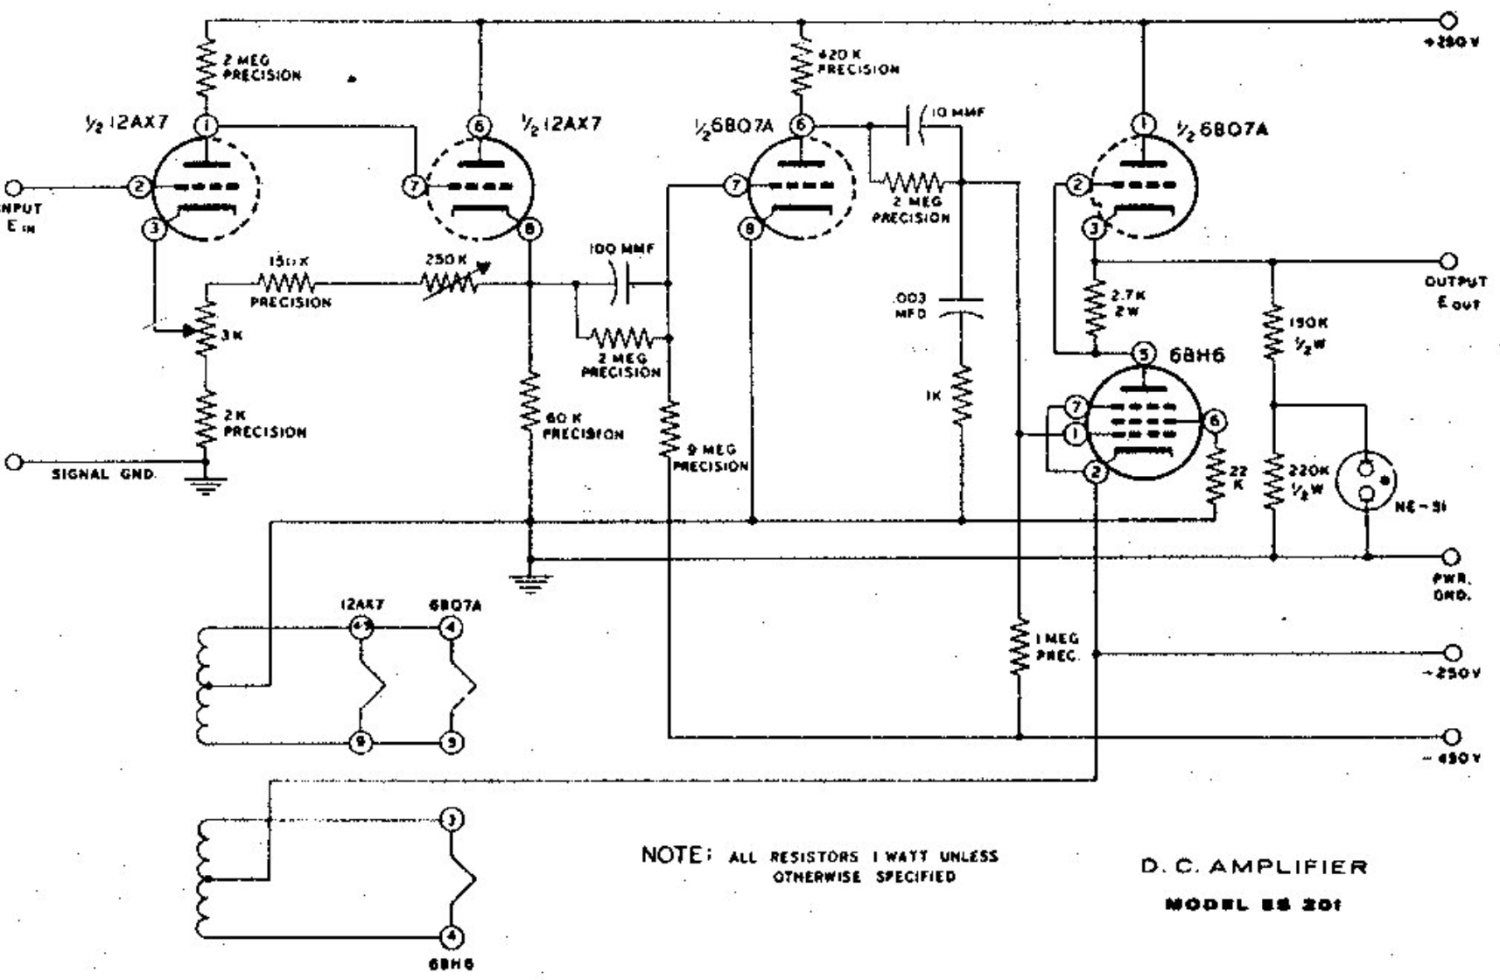 Heathkit ES-201 DC Amplifier - Schematic Diagram